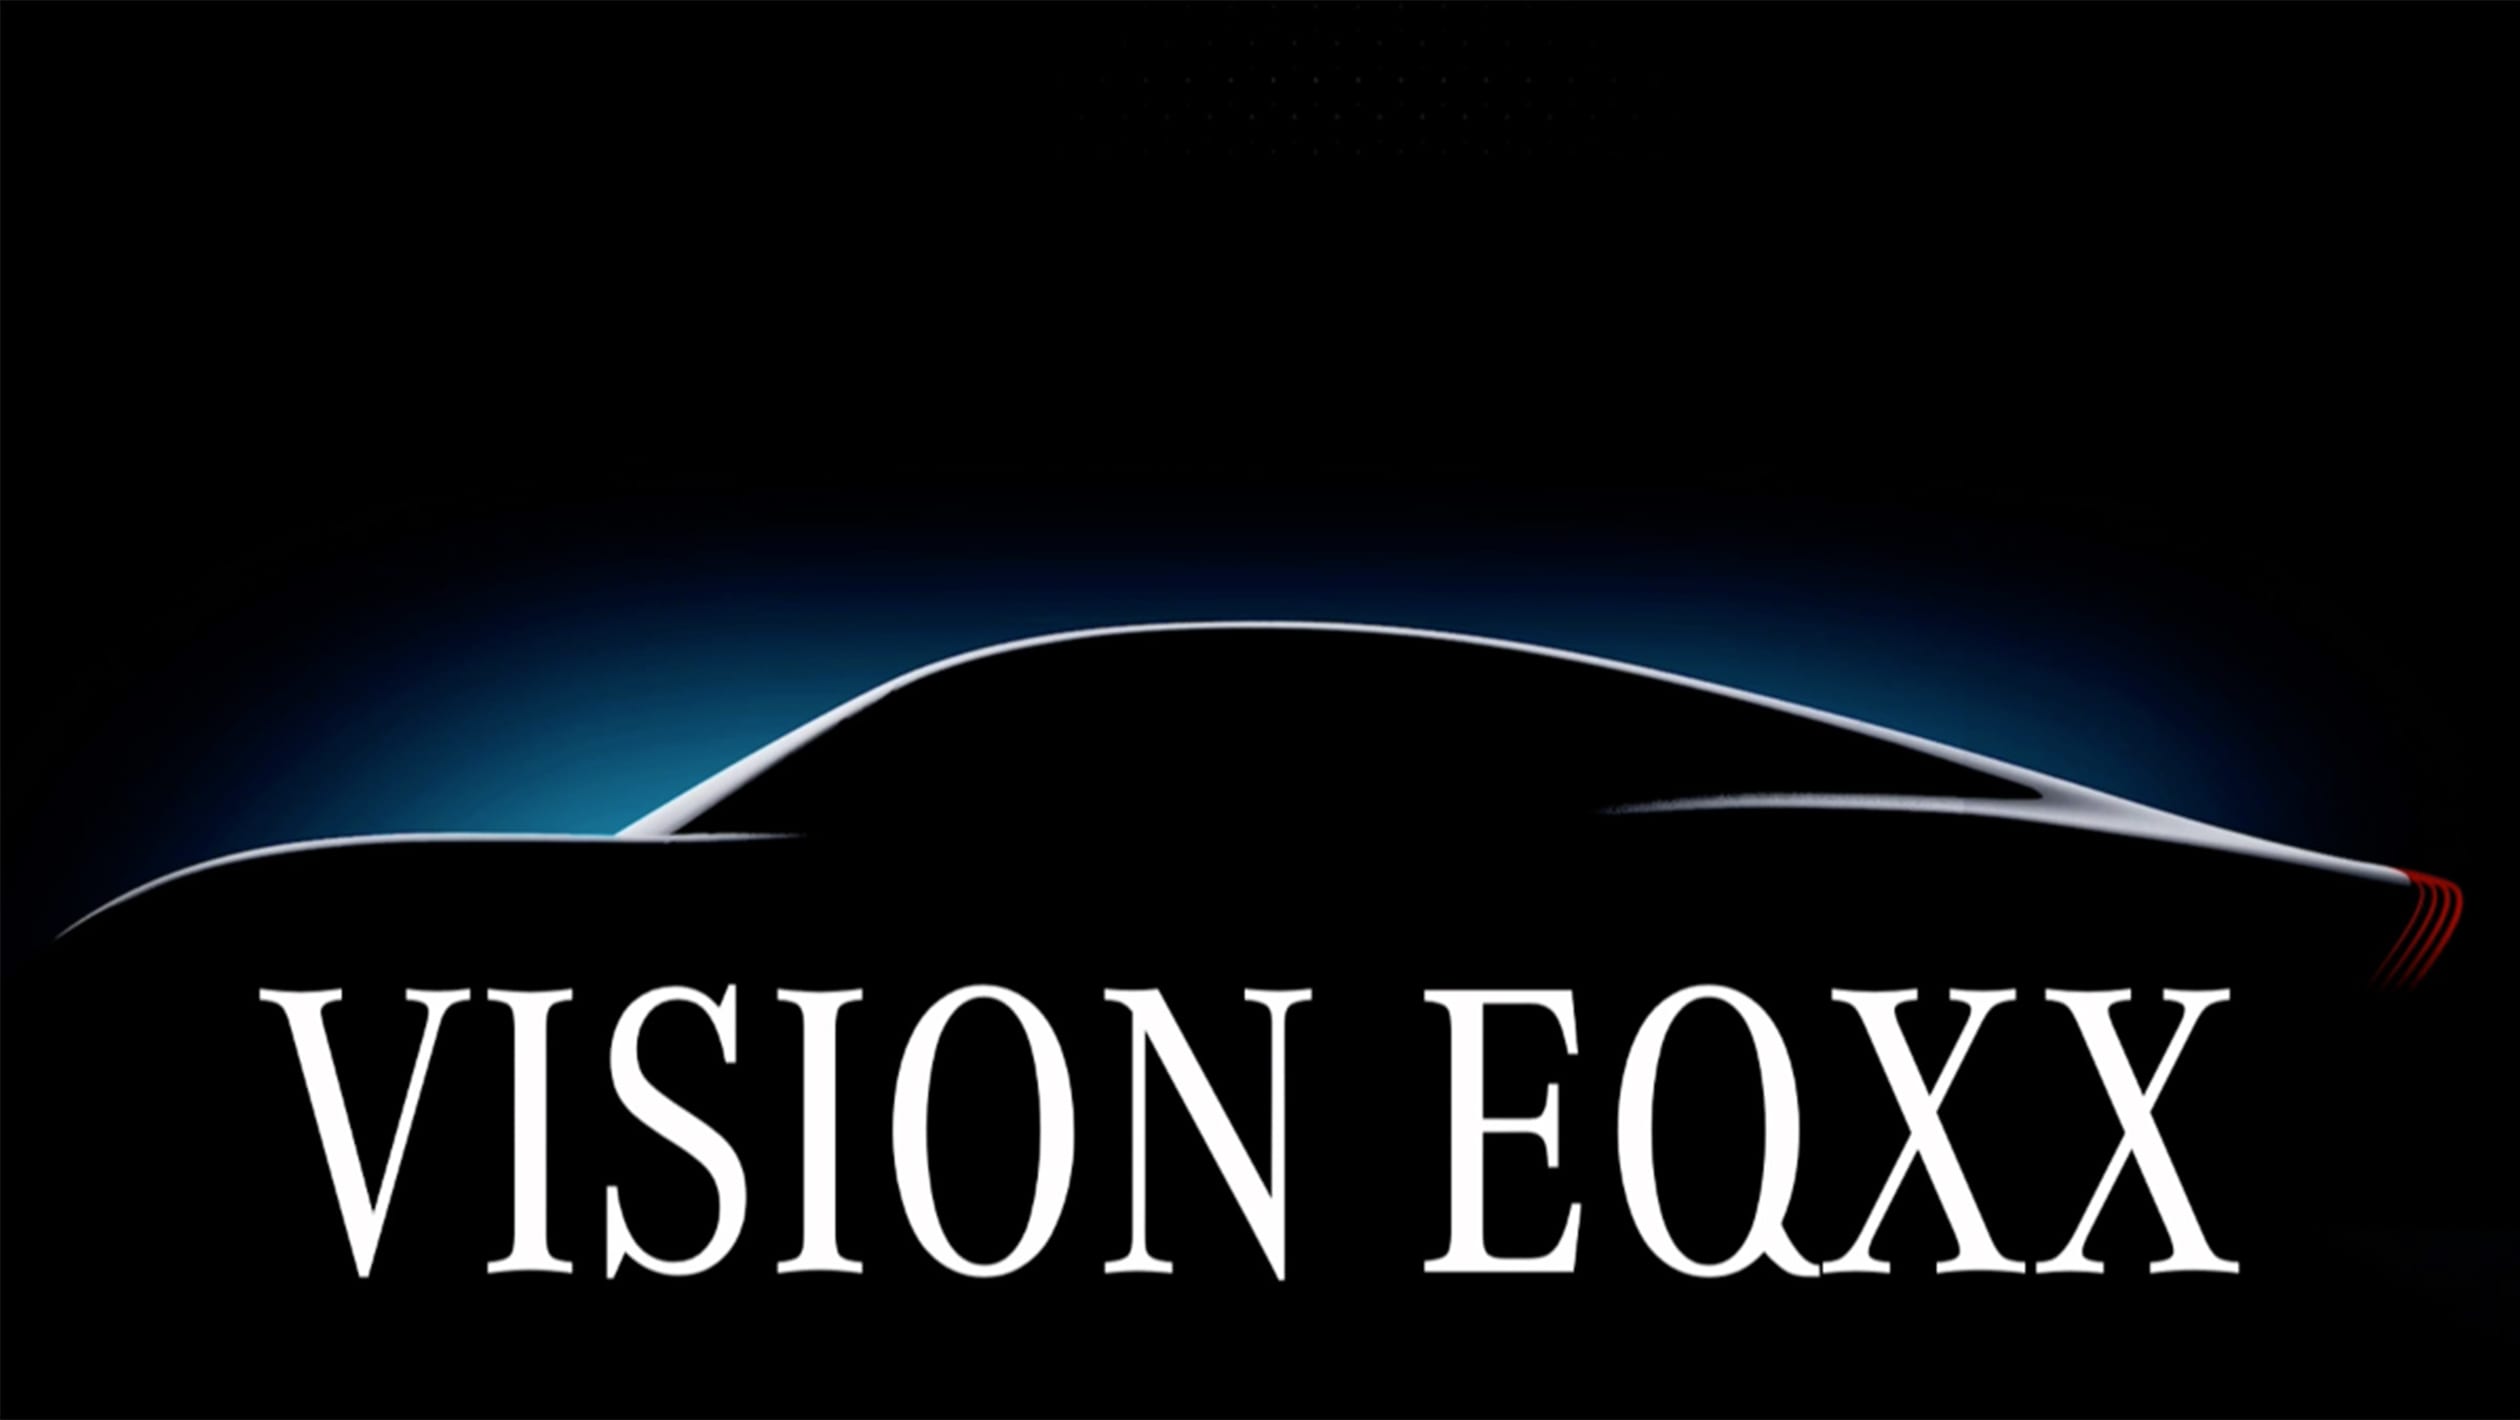 Mercedes Vision EQXX prototype teasers